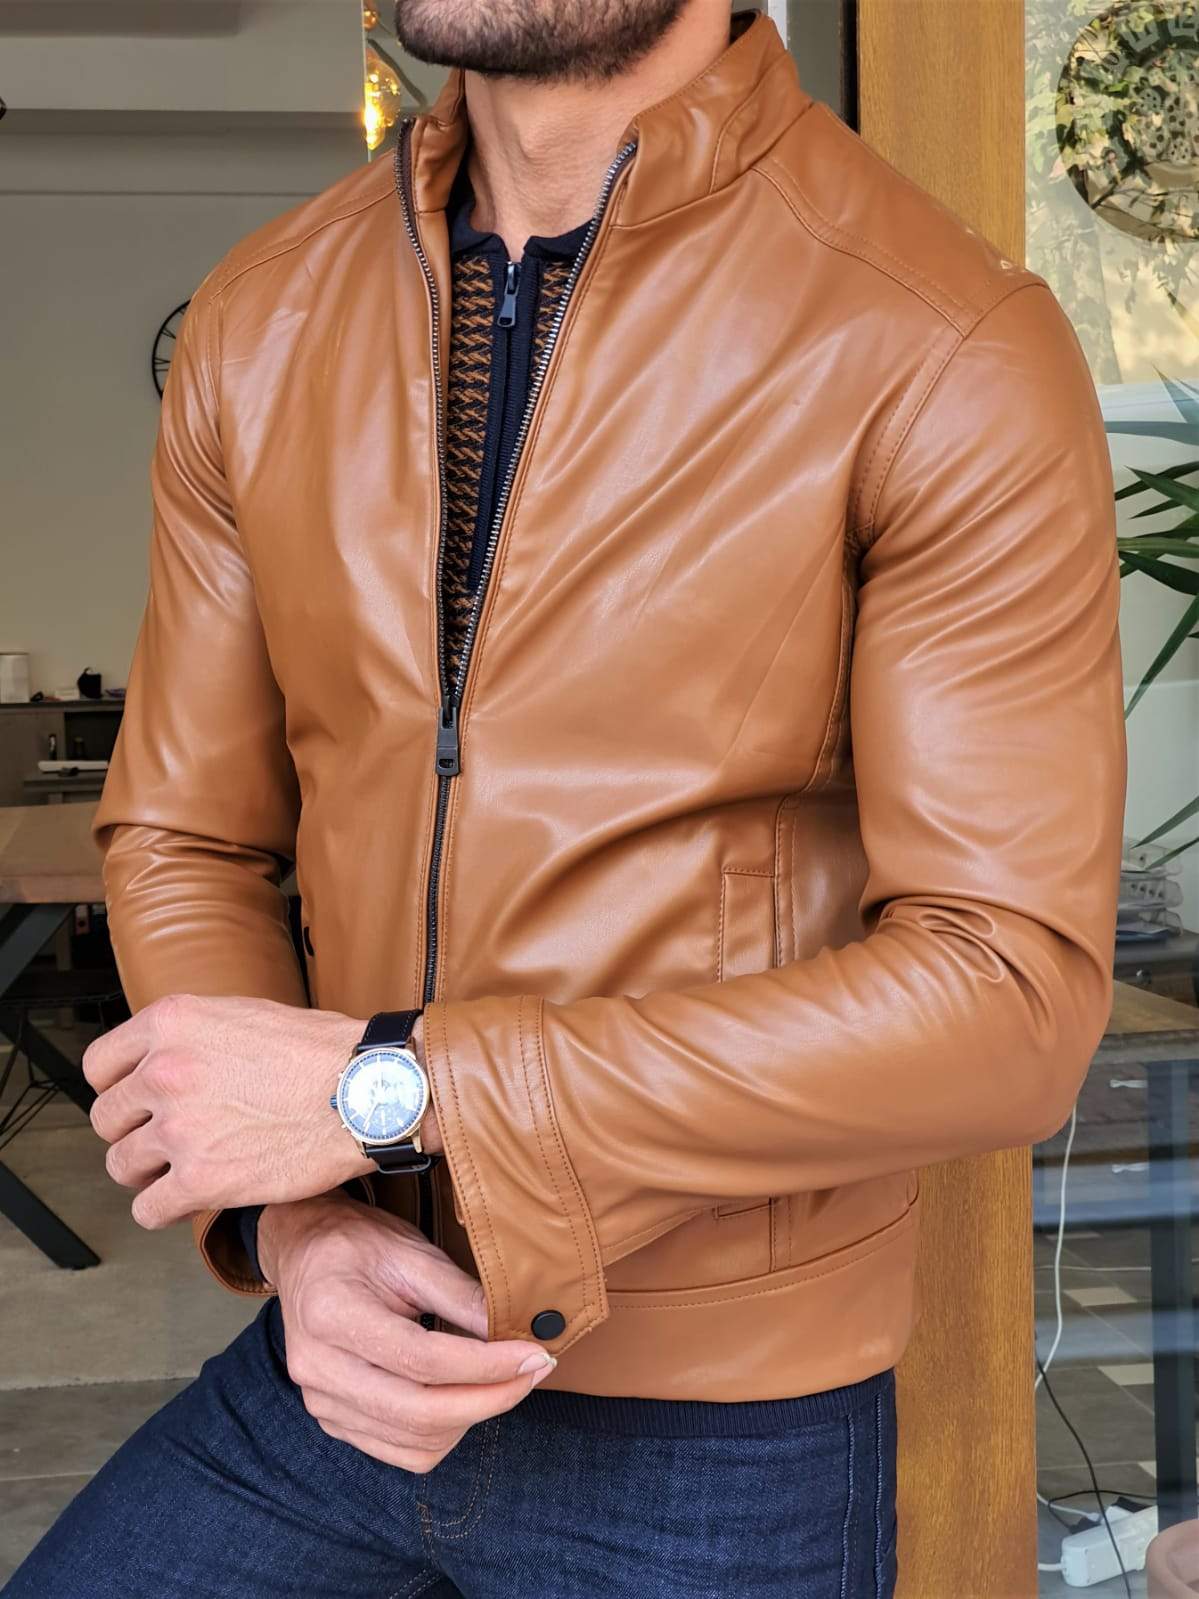 Khaki/Black Spring/Autumn Casual Fashion Jackets Men's Brand Slim Fit  Jackets Male Motorcycle Zipper Coats… | Mens jackets casual, Jackets men  fashion, Mens jackets